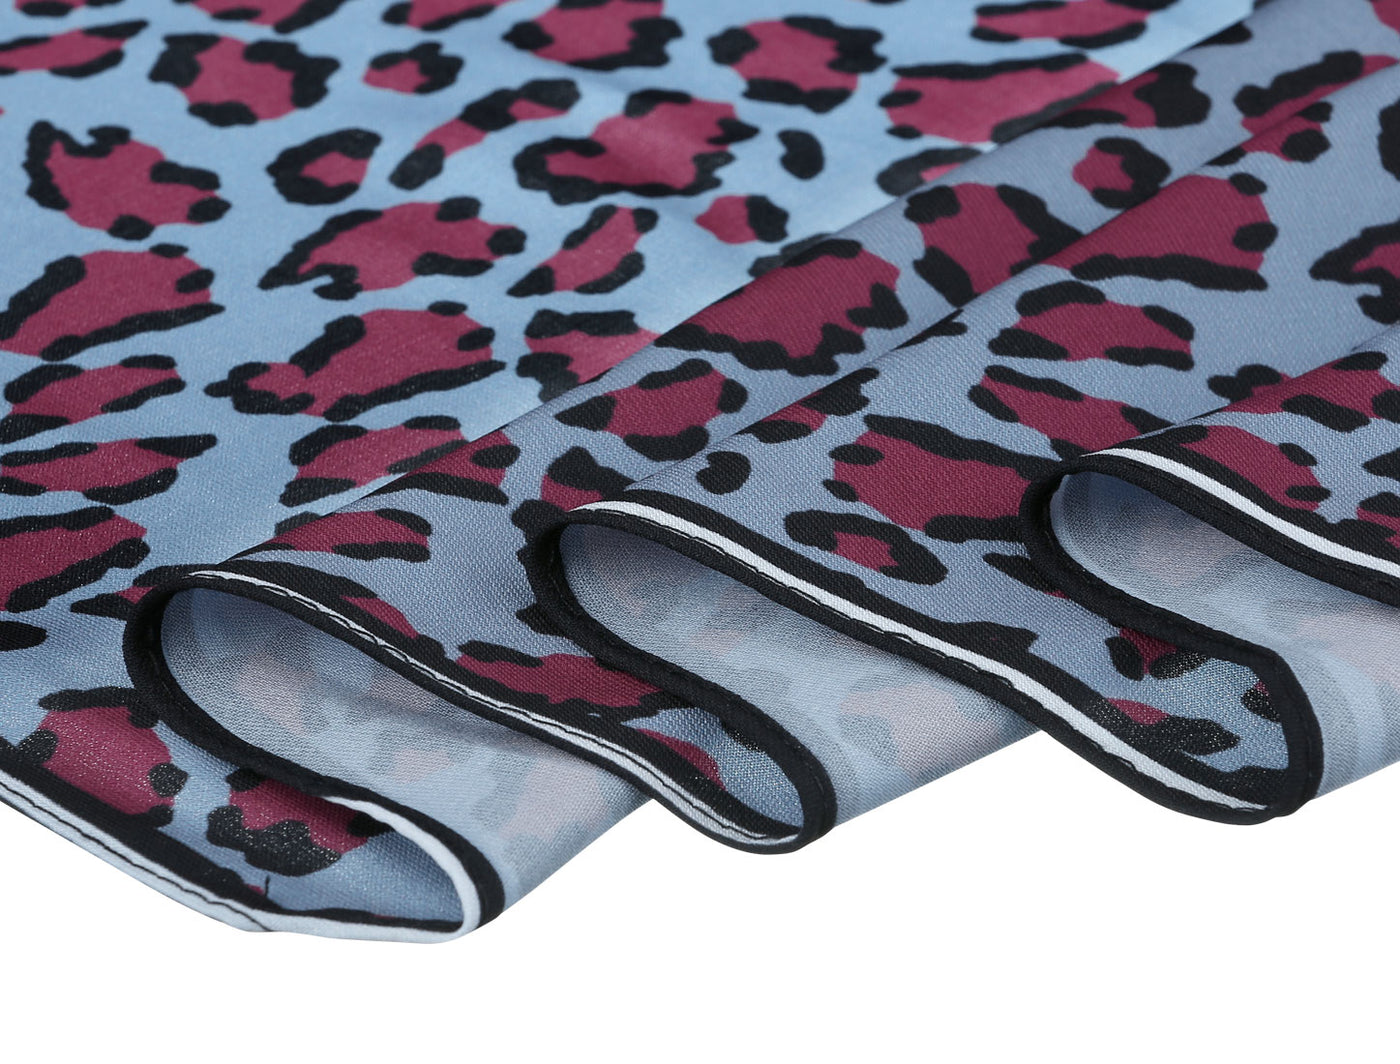 Allegra K Leopard Print Rhombus Neck Scarf Scarves Wraps Neckerchief